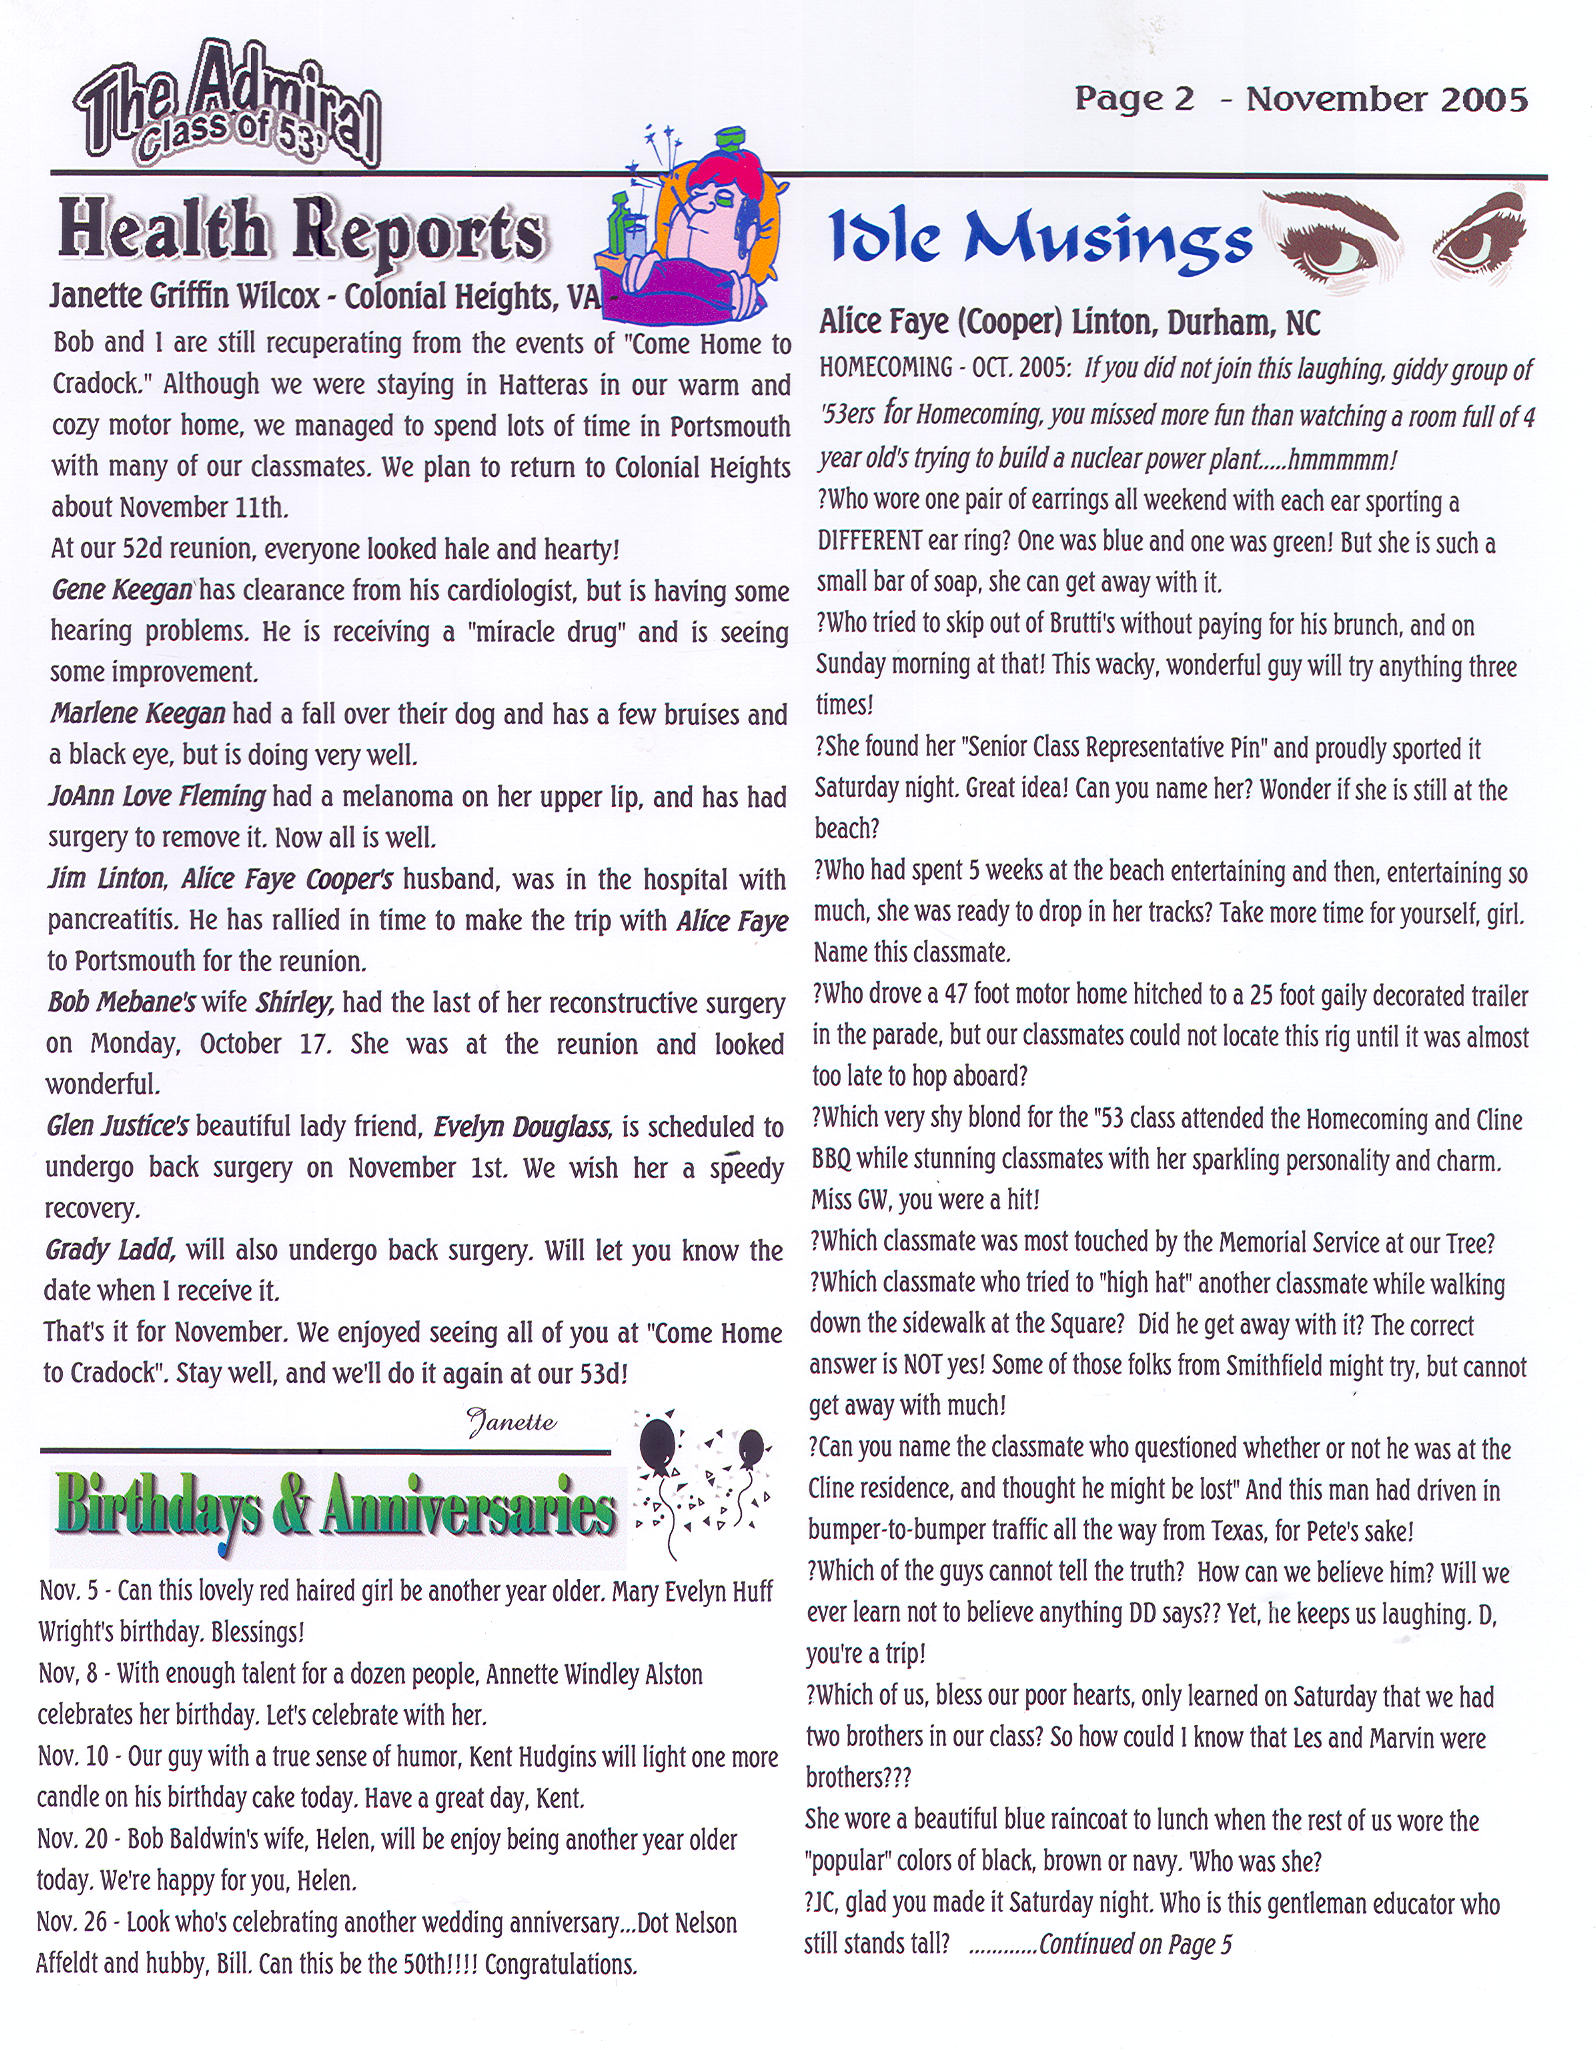 The Admiral - November 2005 - pg. 2